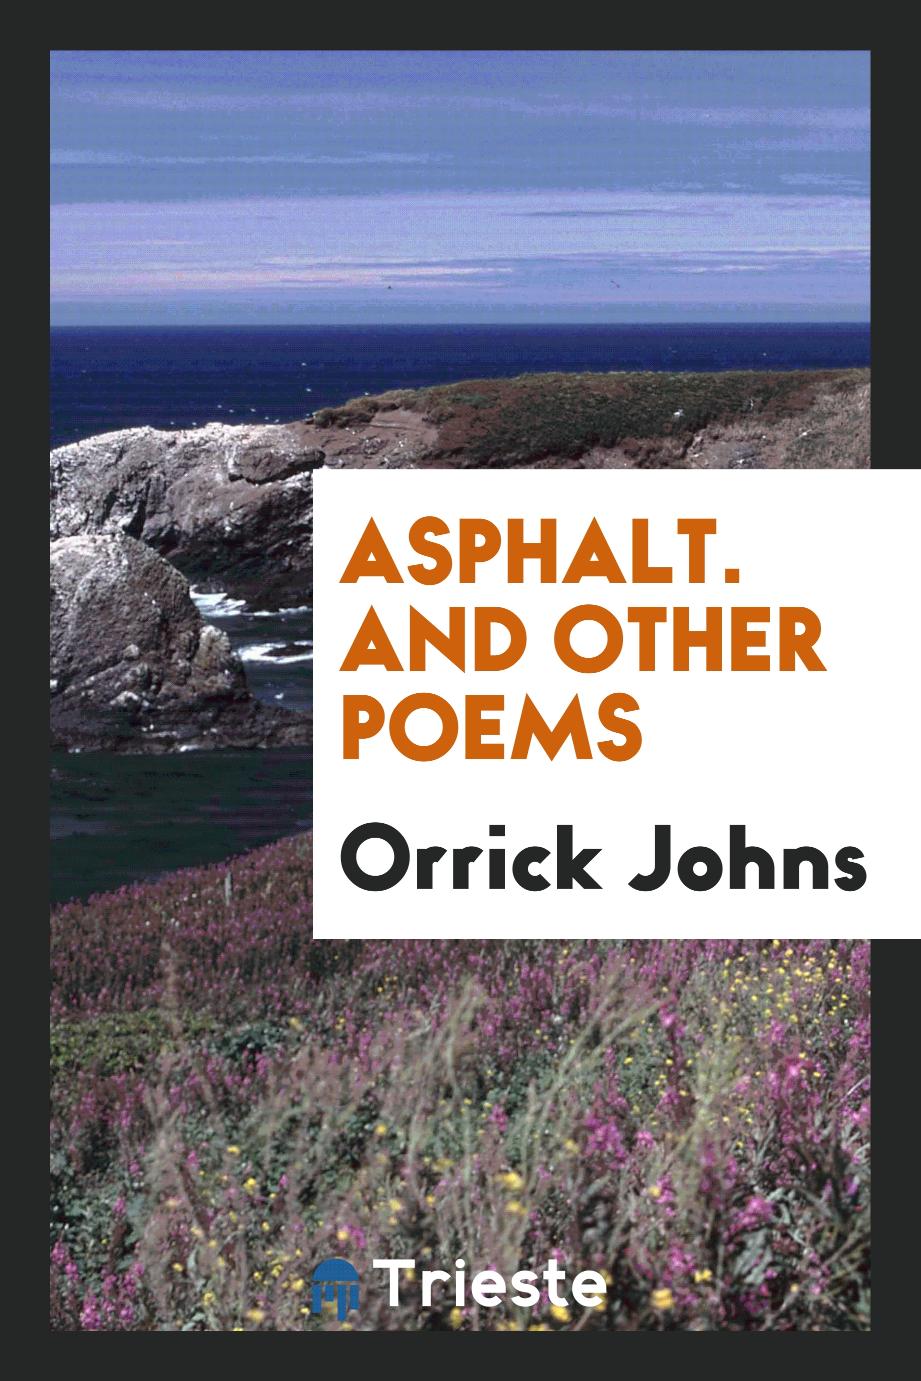 Asphalt. And Other Poems